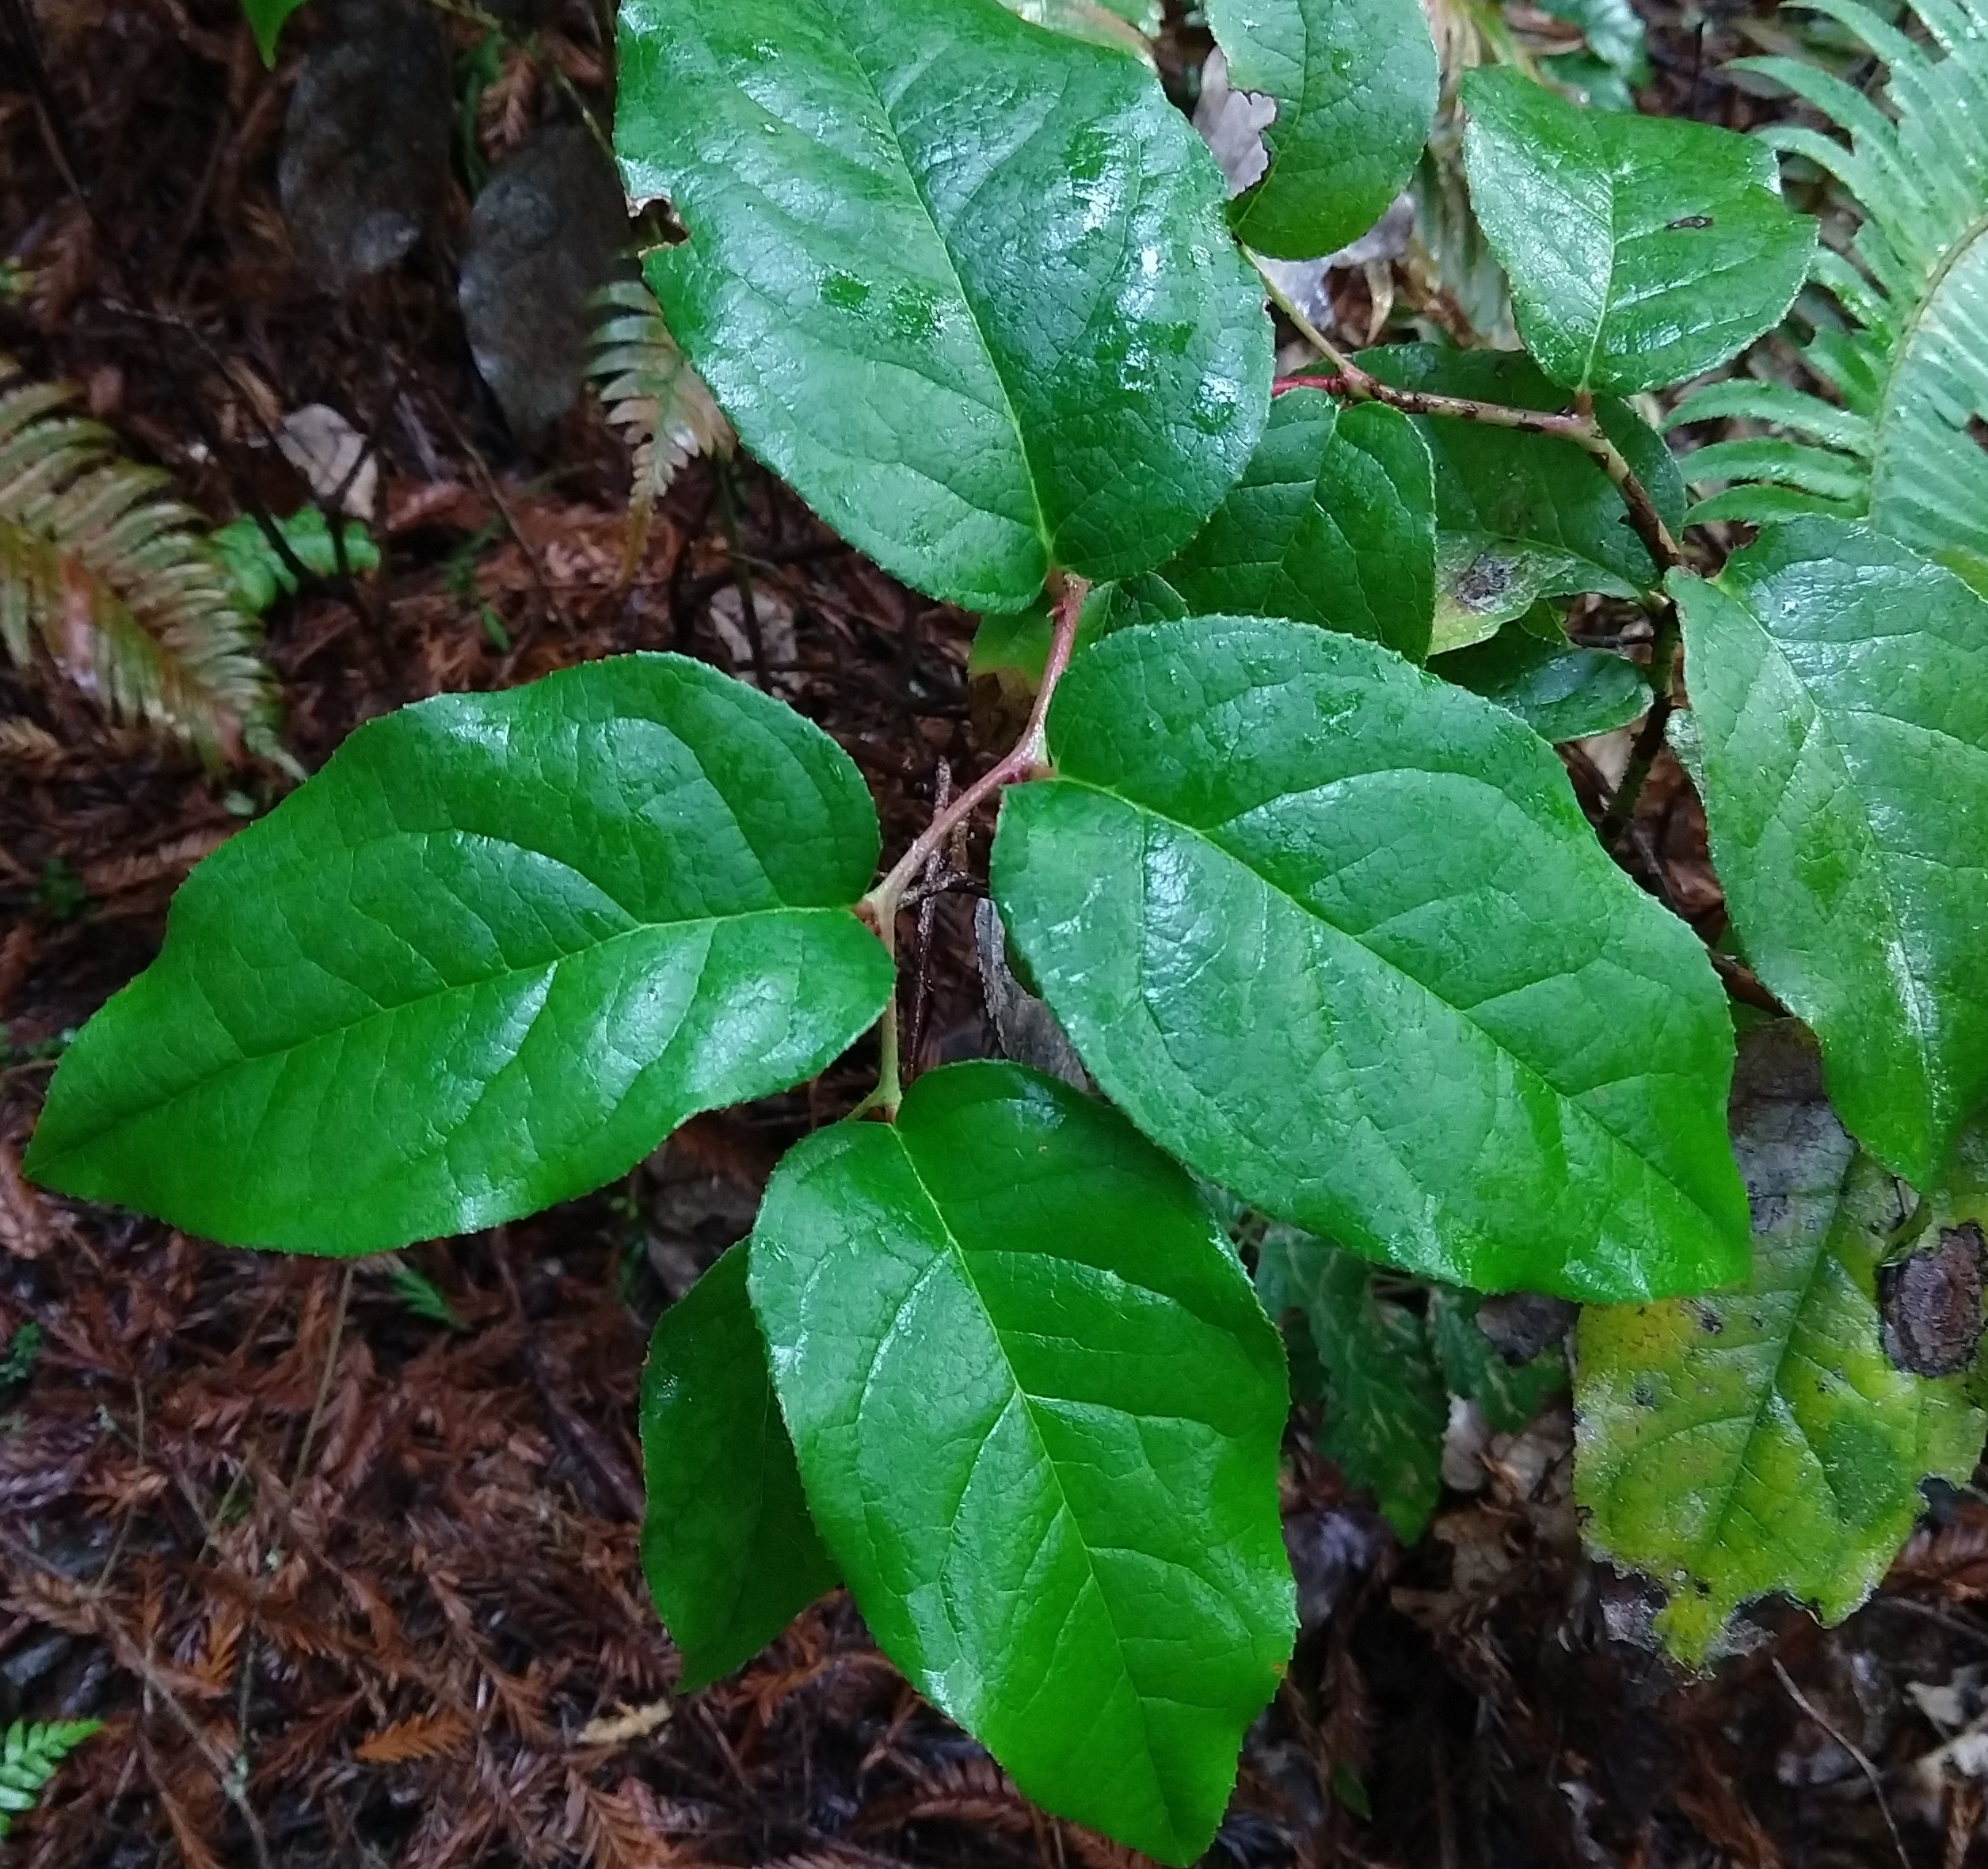 A plant with alternate leaf arrangement